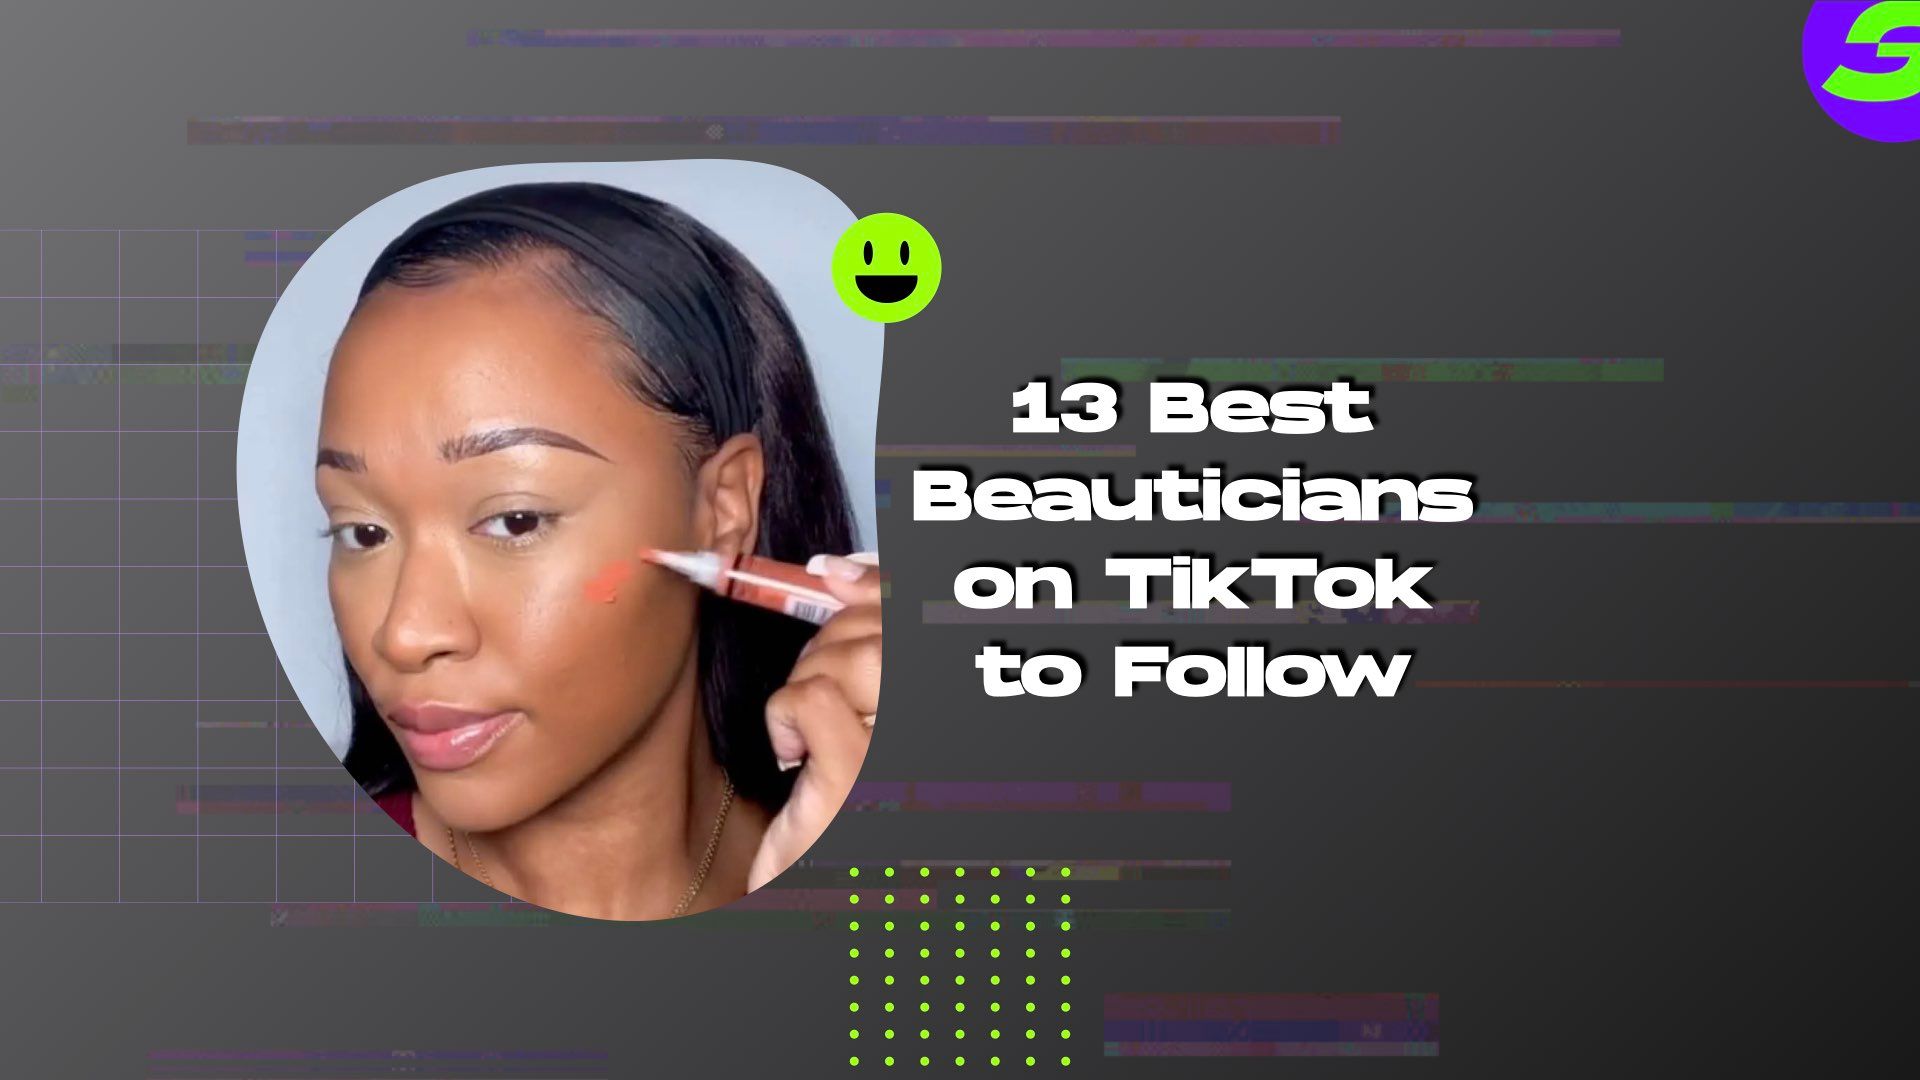 shotcut free video edito android 13 Best Beauticians on TikTok